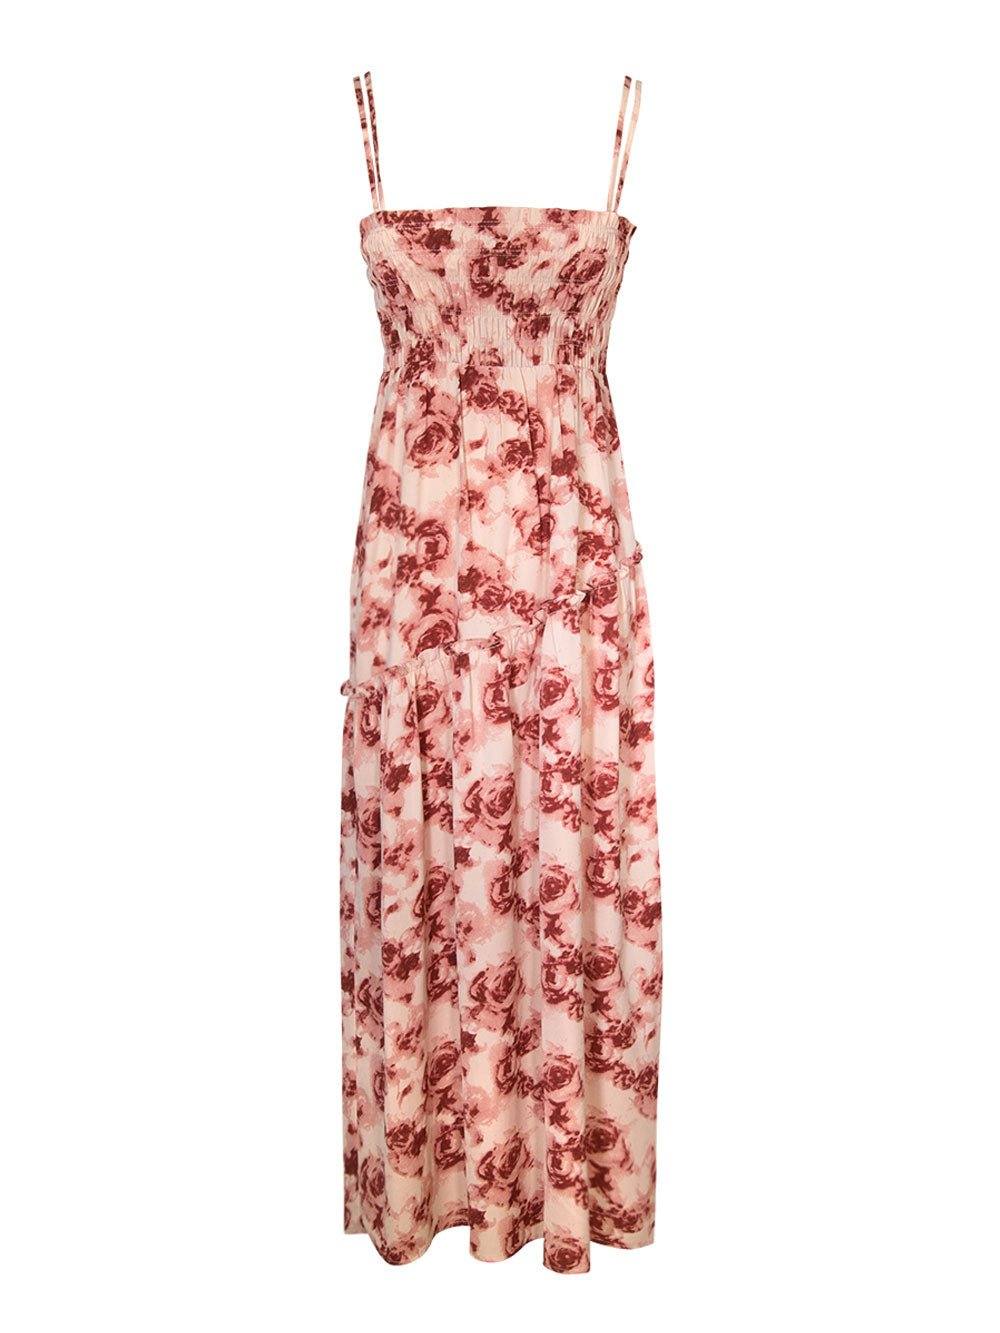 Adjustable Maxi Dress - Floral Rose Print - OCEAN MYSTERY